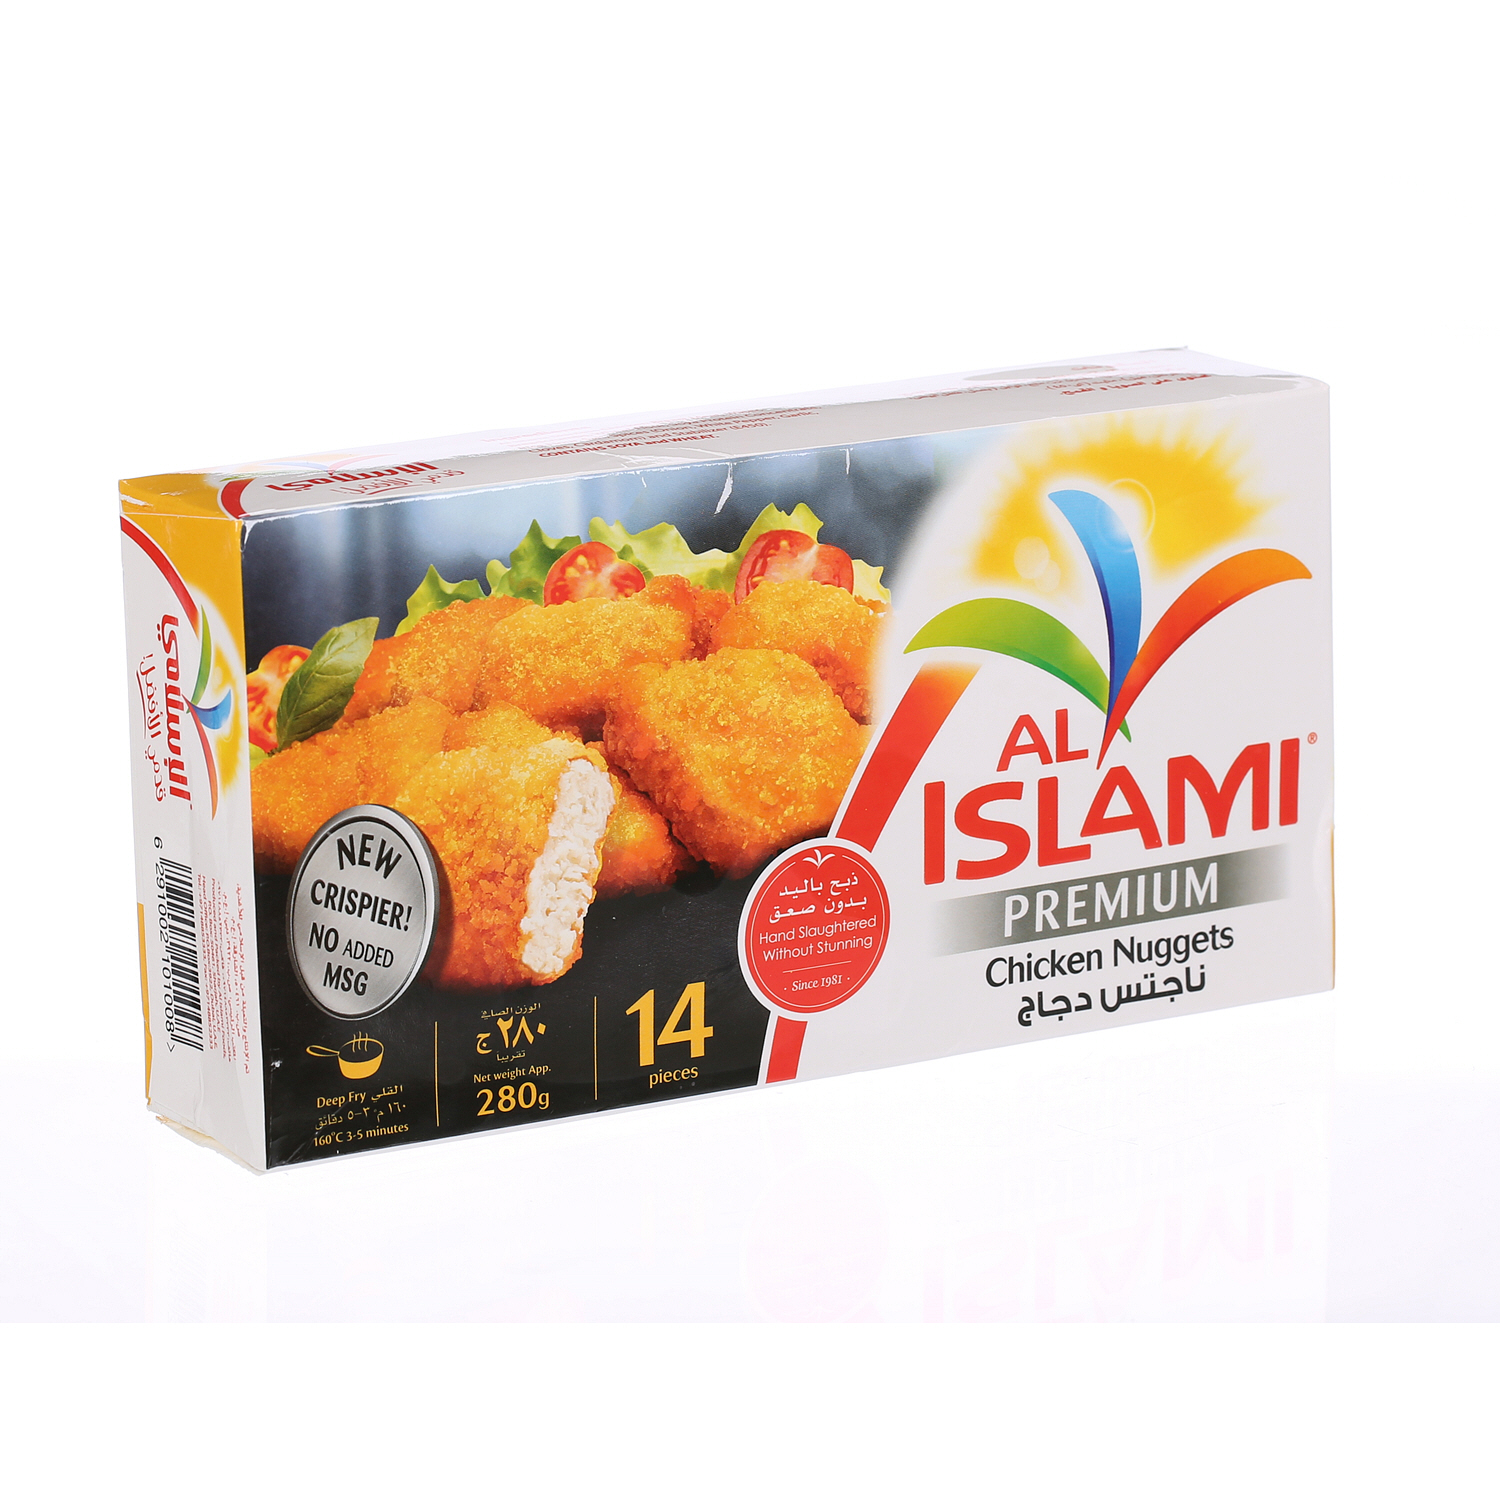 Al Islami Chicken Nuggets 280gm